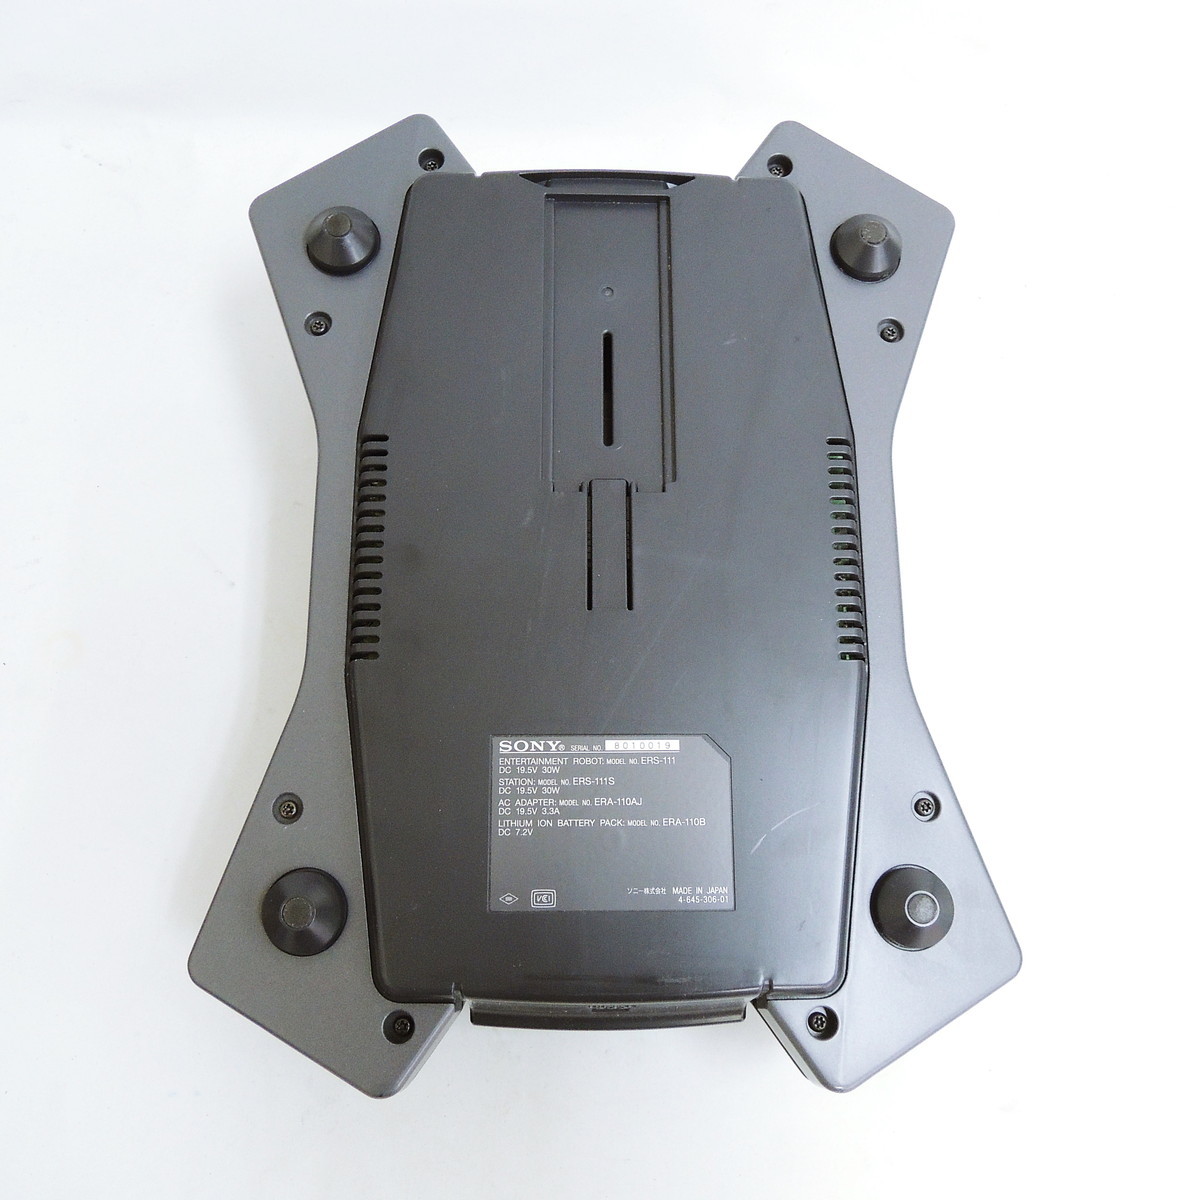  Sony ERS-111 Aibo entertainment робот ware ver1.1 ERA-111M с дистанционным пультом SONY AIBO ENTERTAINMENT ROBOT аккумулятор дефект (4